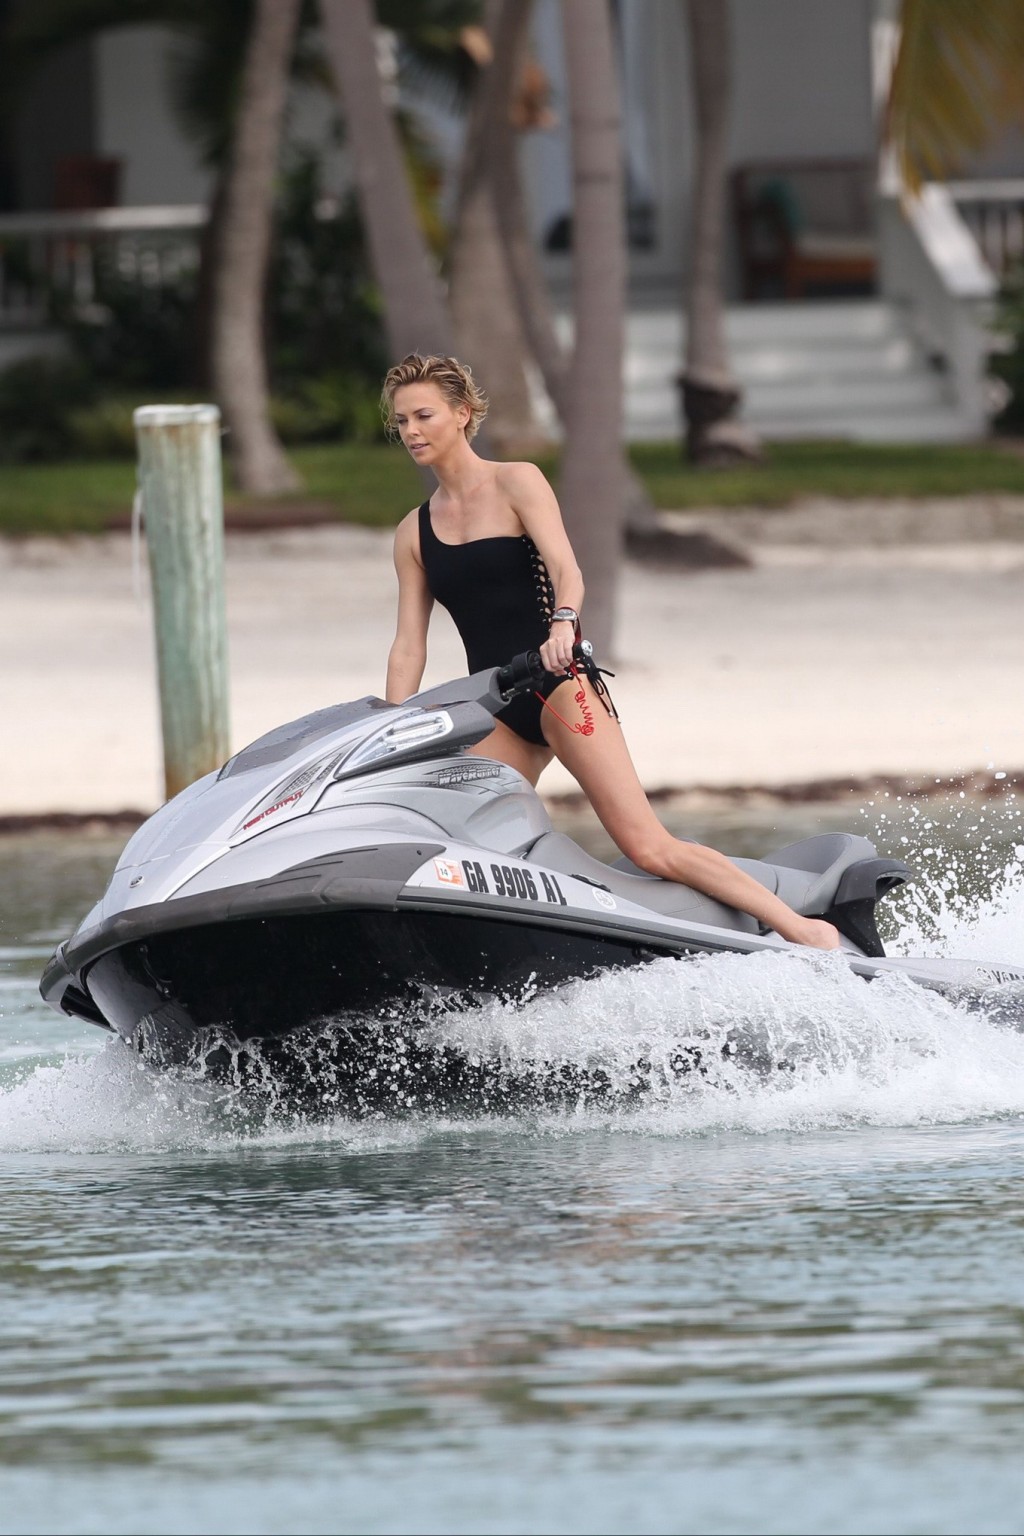 Charlize Theron jet skiing in black monokini during the photoshoot in Miami Beac #75201284